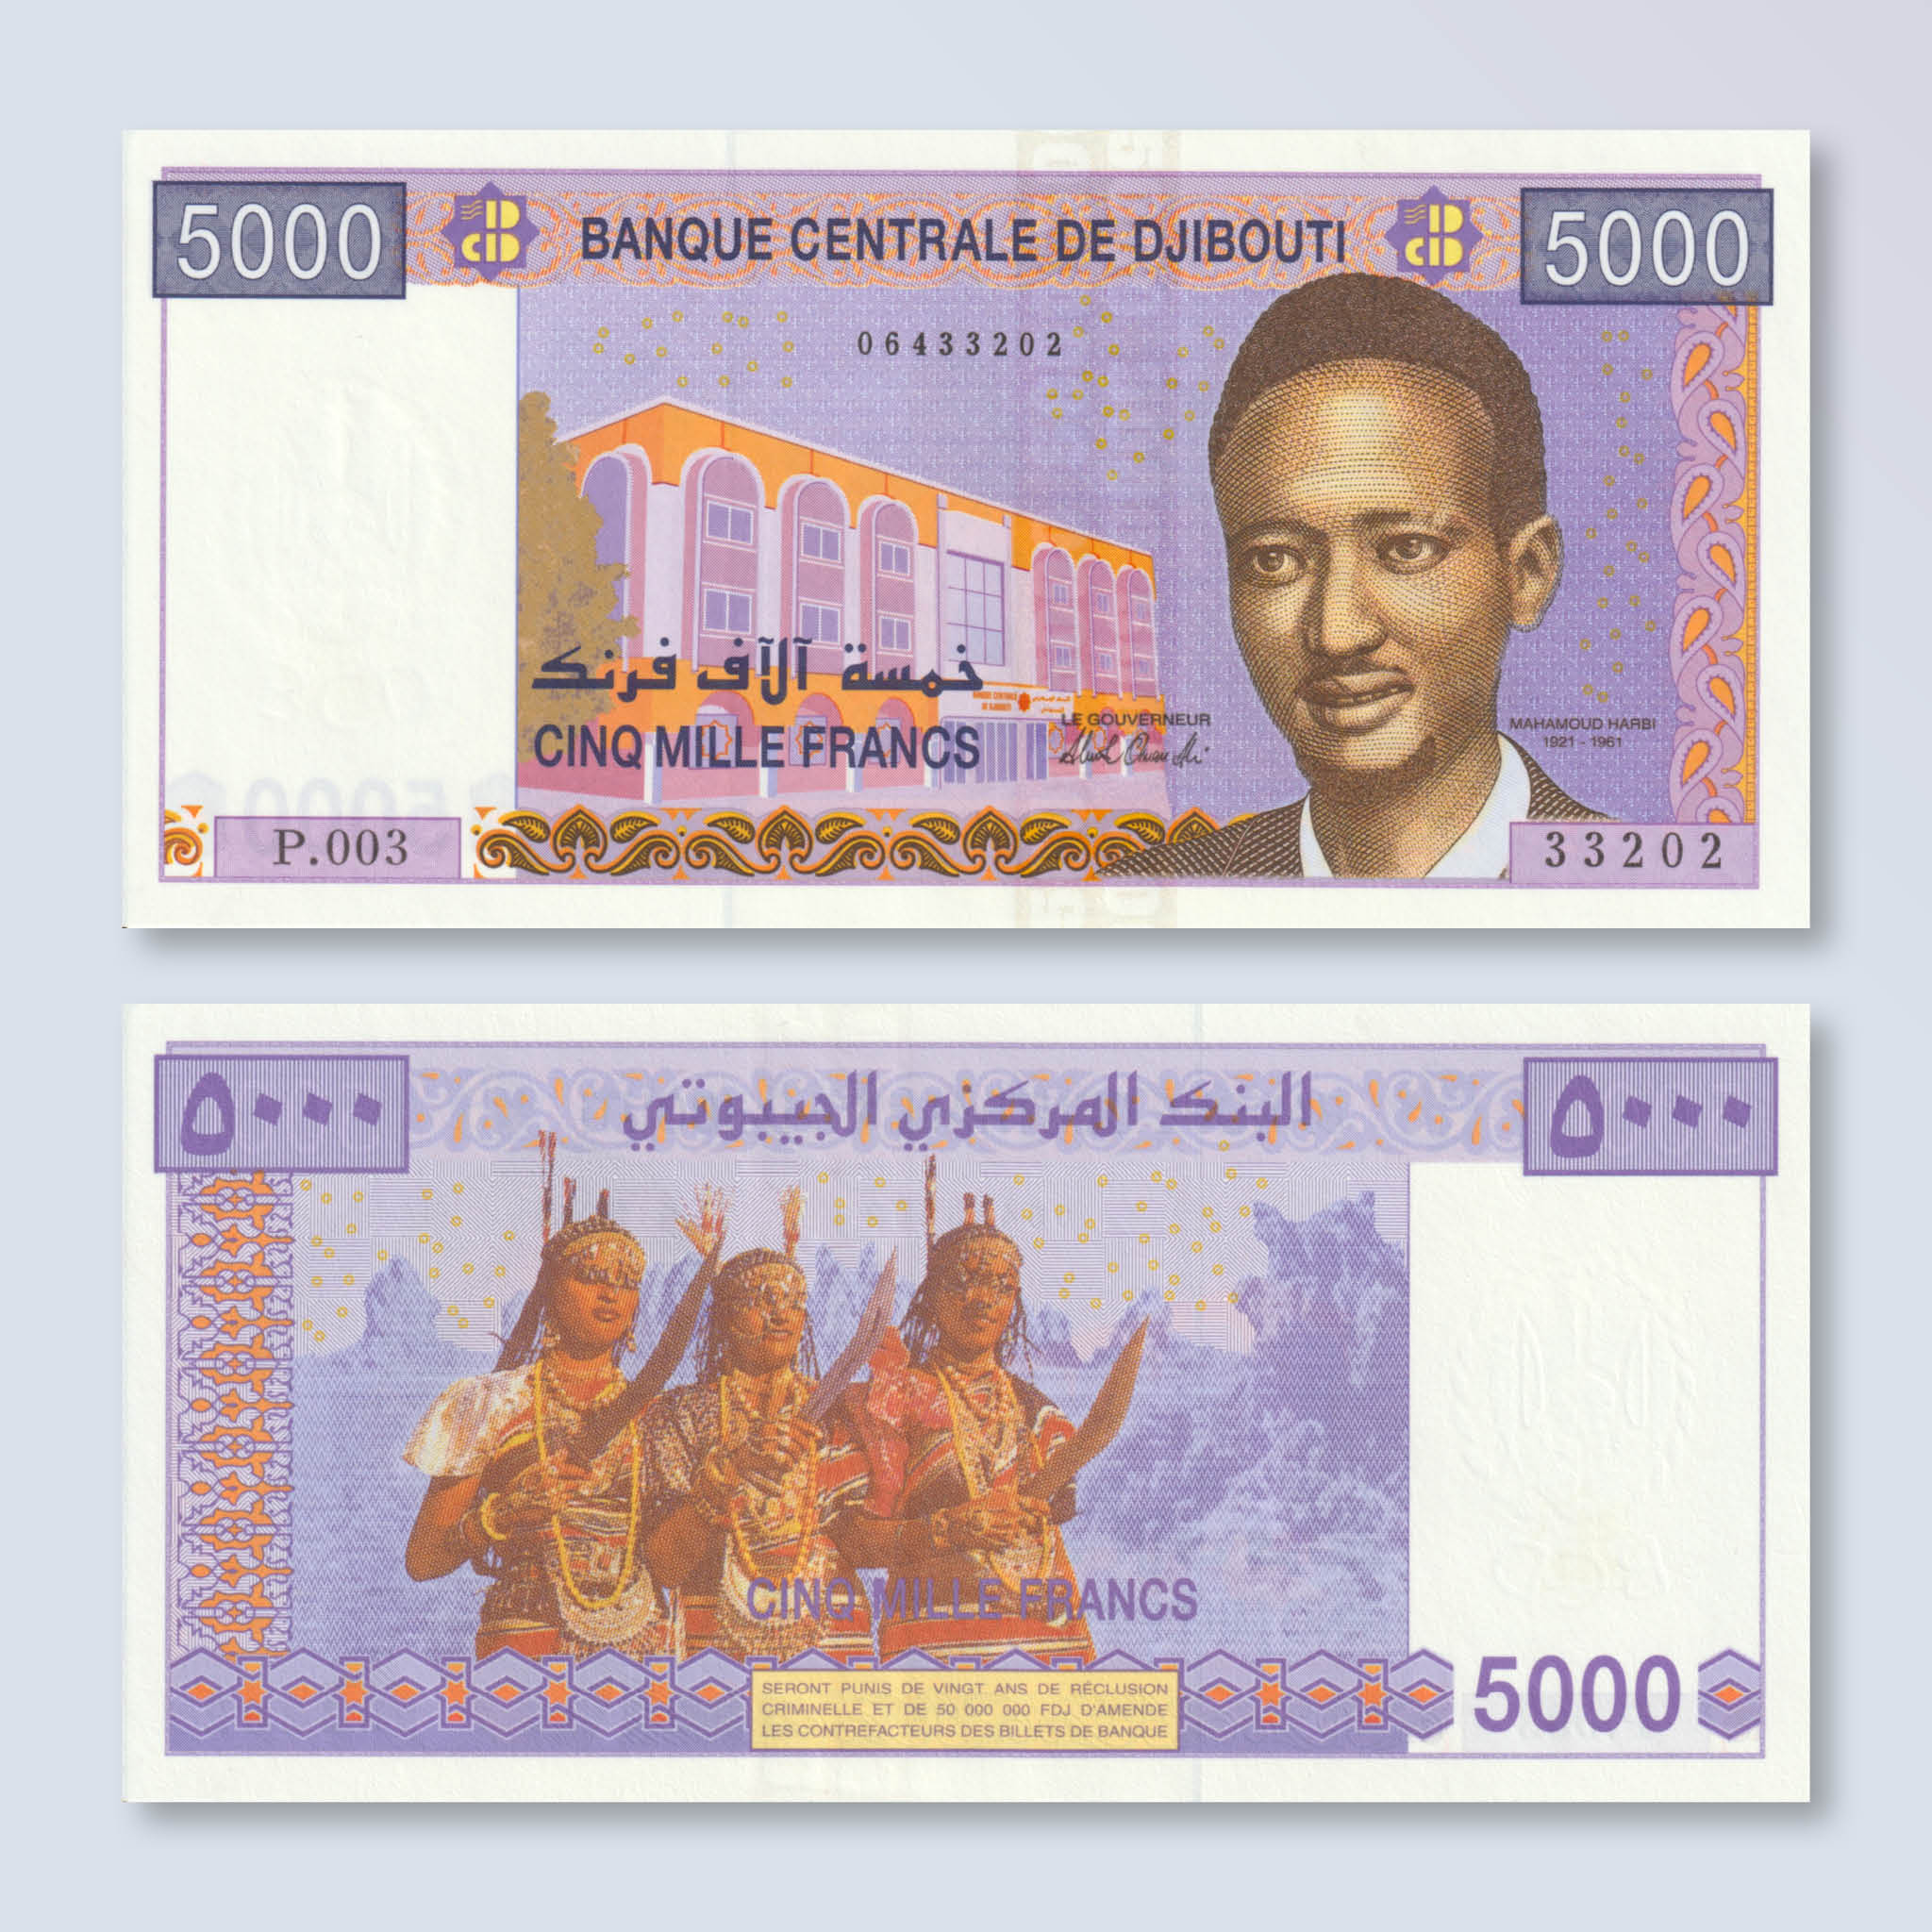 Djibouti 5000 Francs, 2002, B203c, P44, UNC - Robert's World Money - World Banknotes